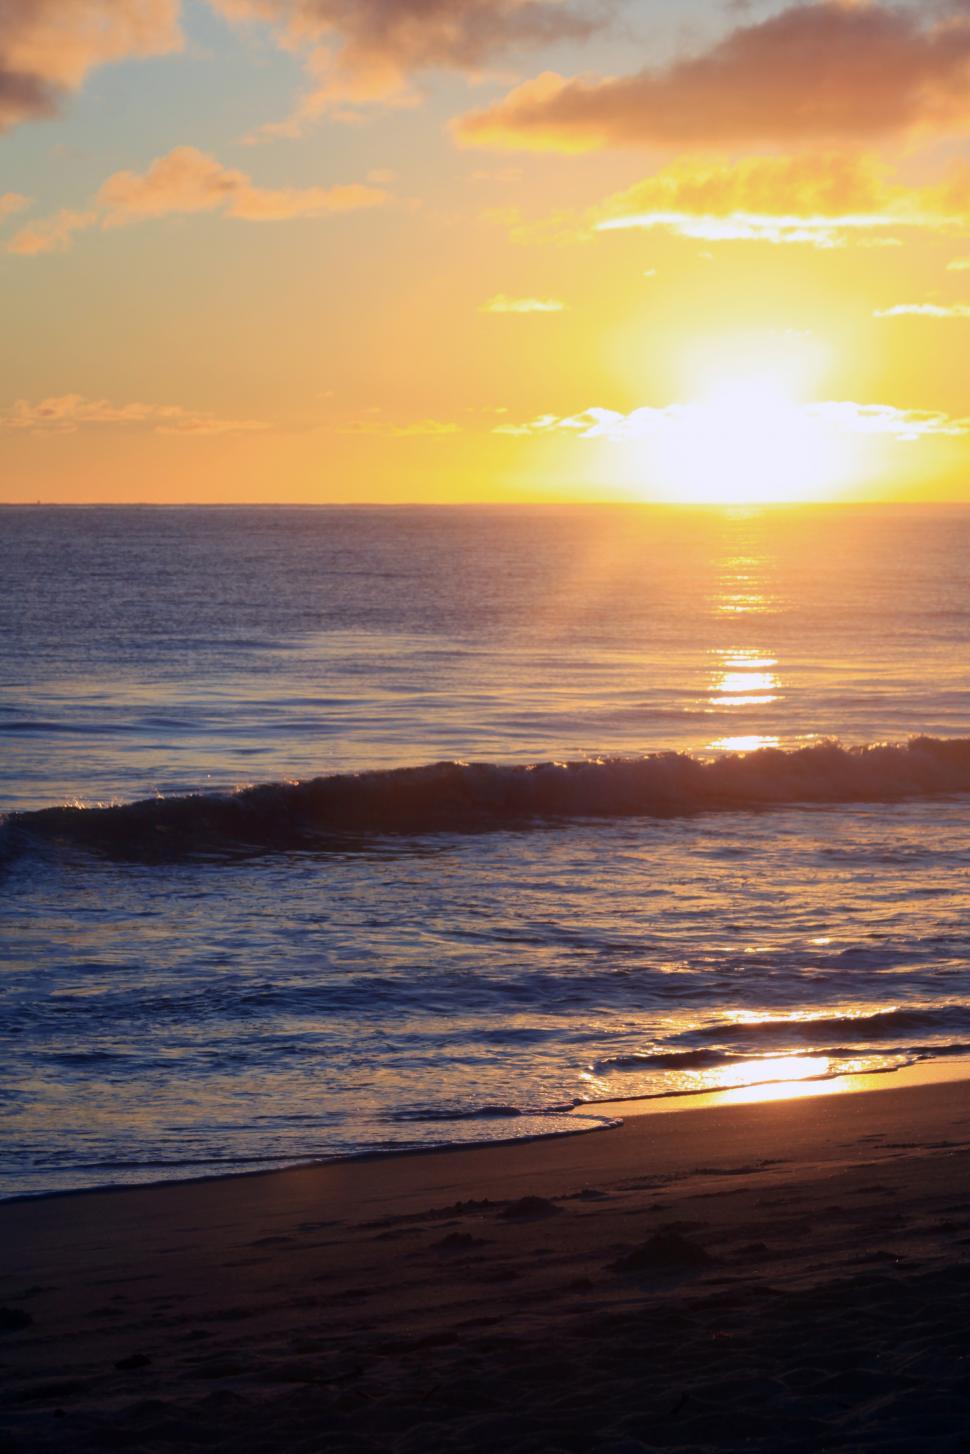 Free Image of A sunset over a Hawaiian beach 